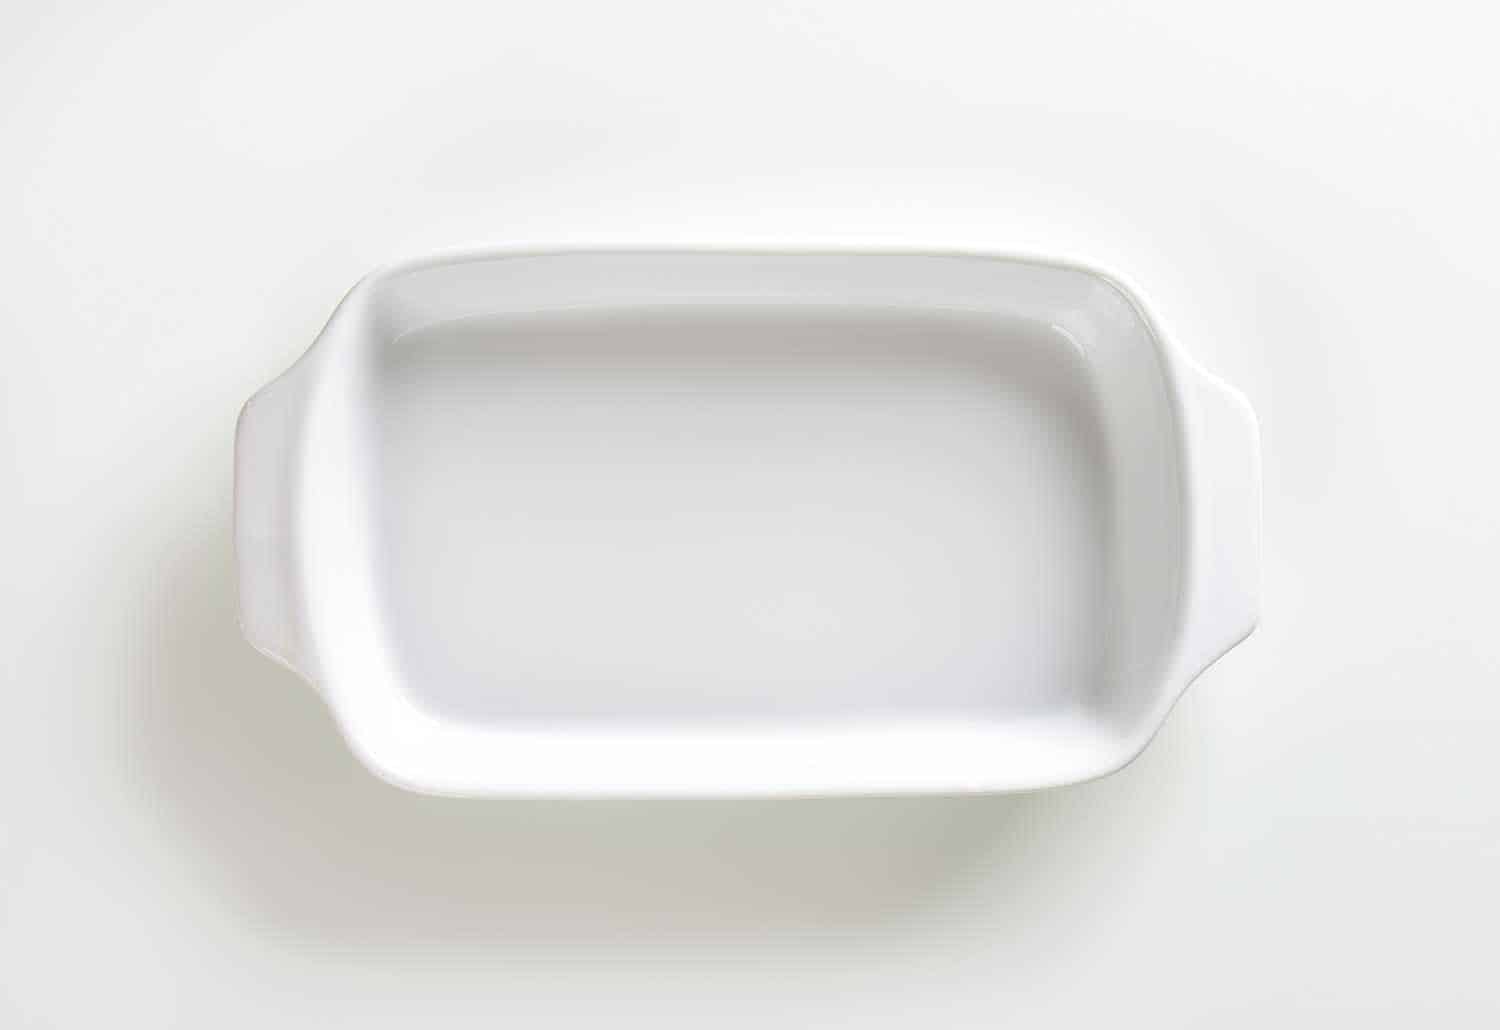 Classic white ceramic baking dish with handles